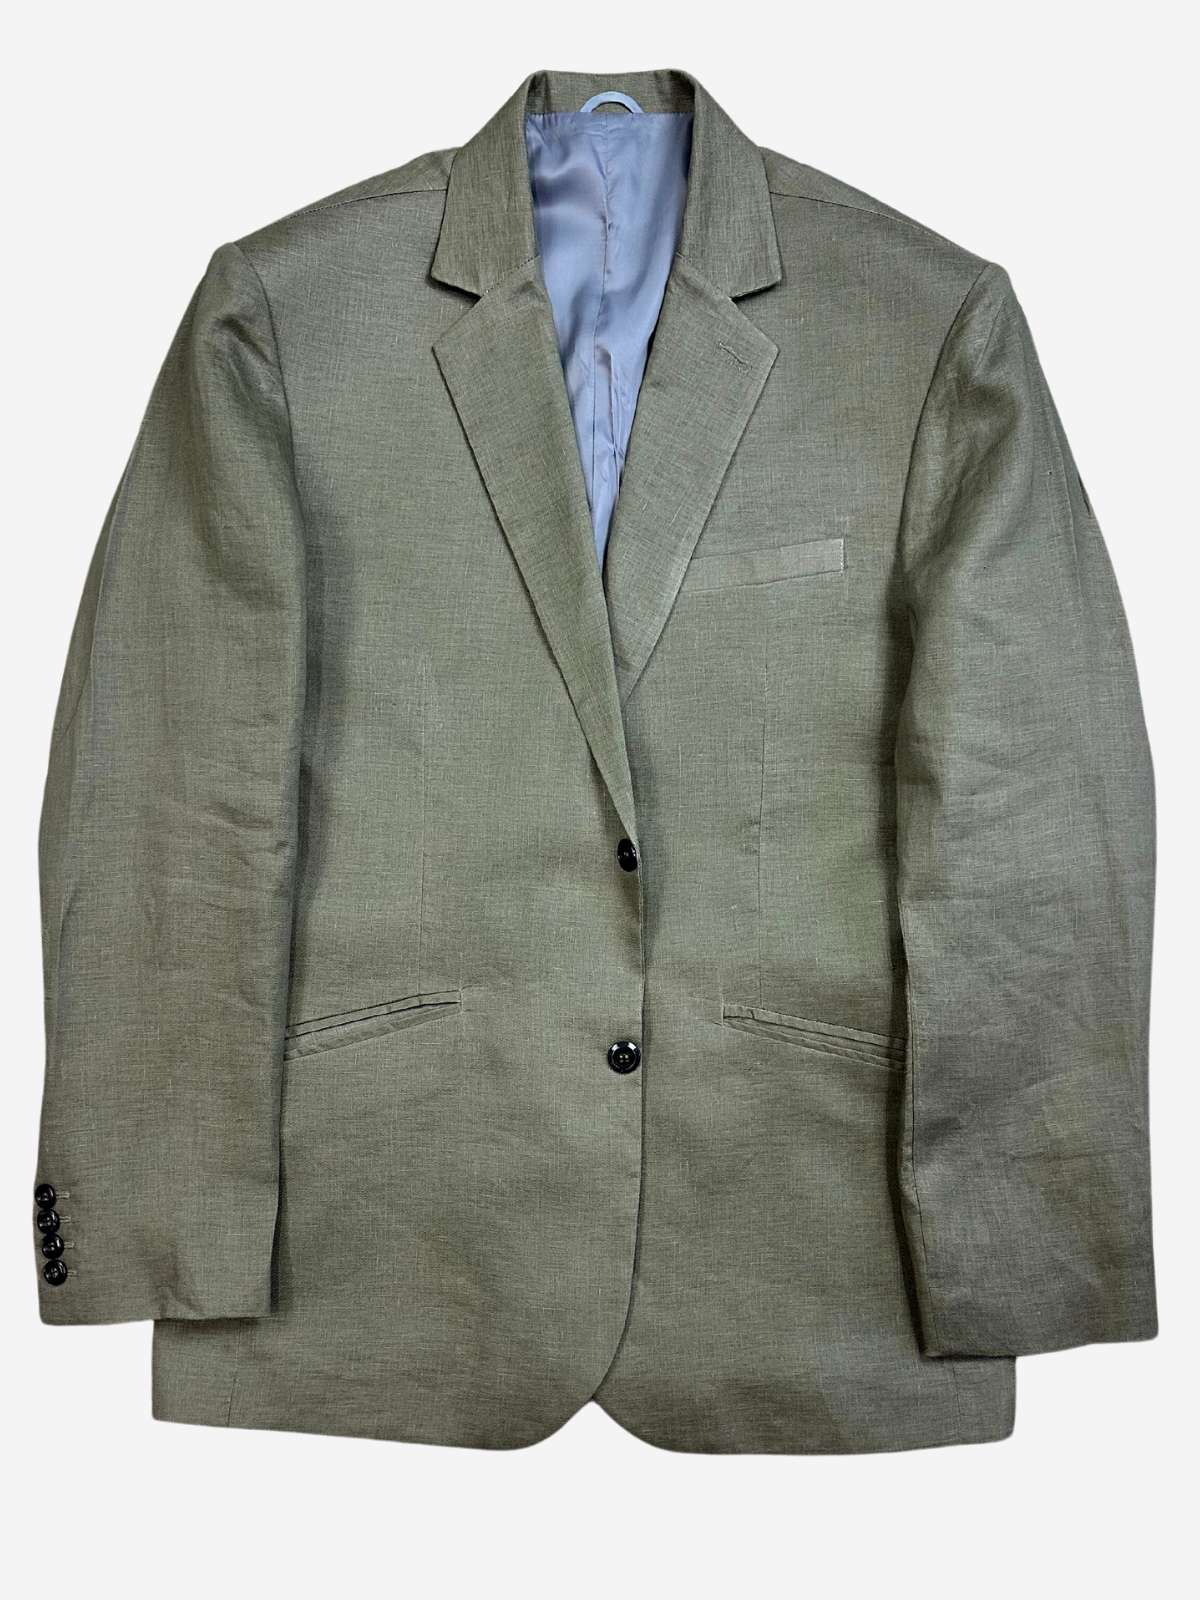 Slate Linen Jacket